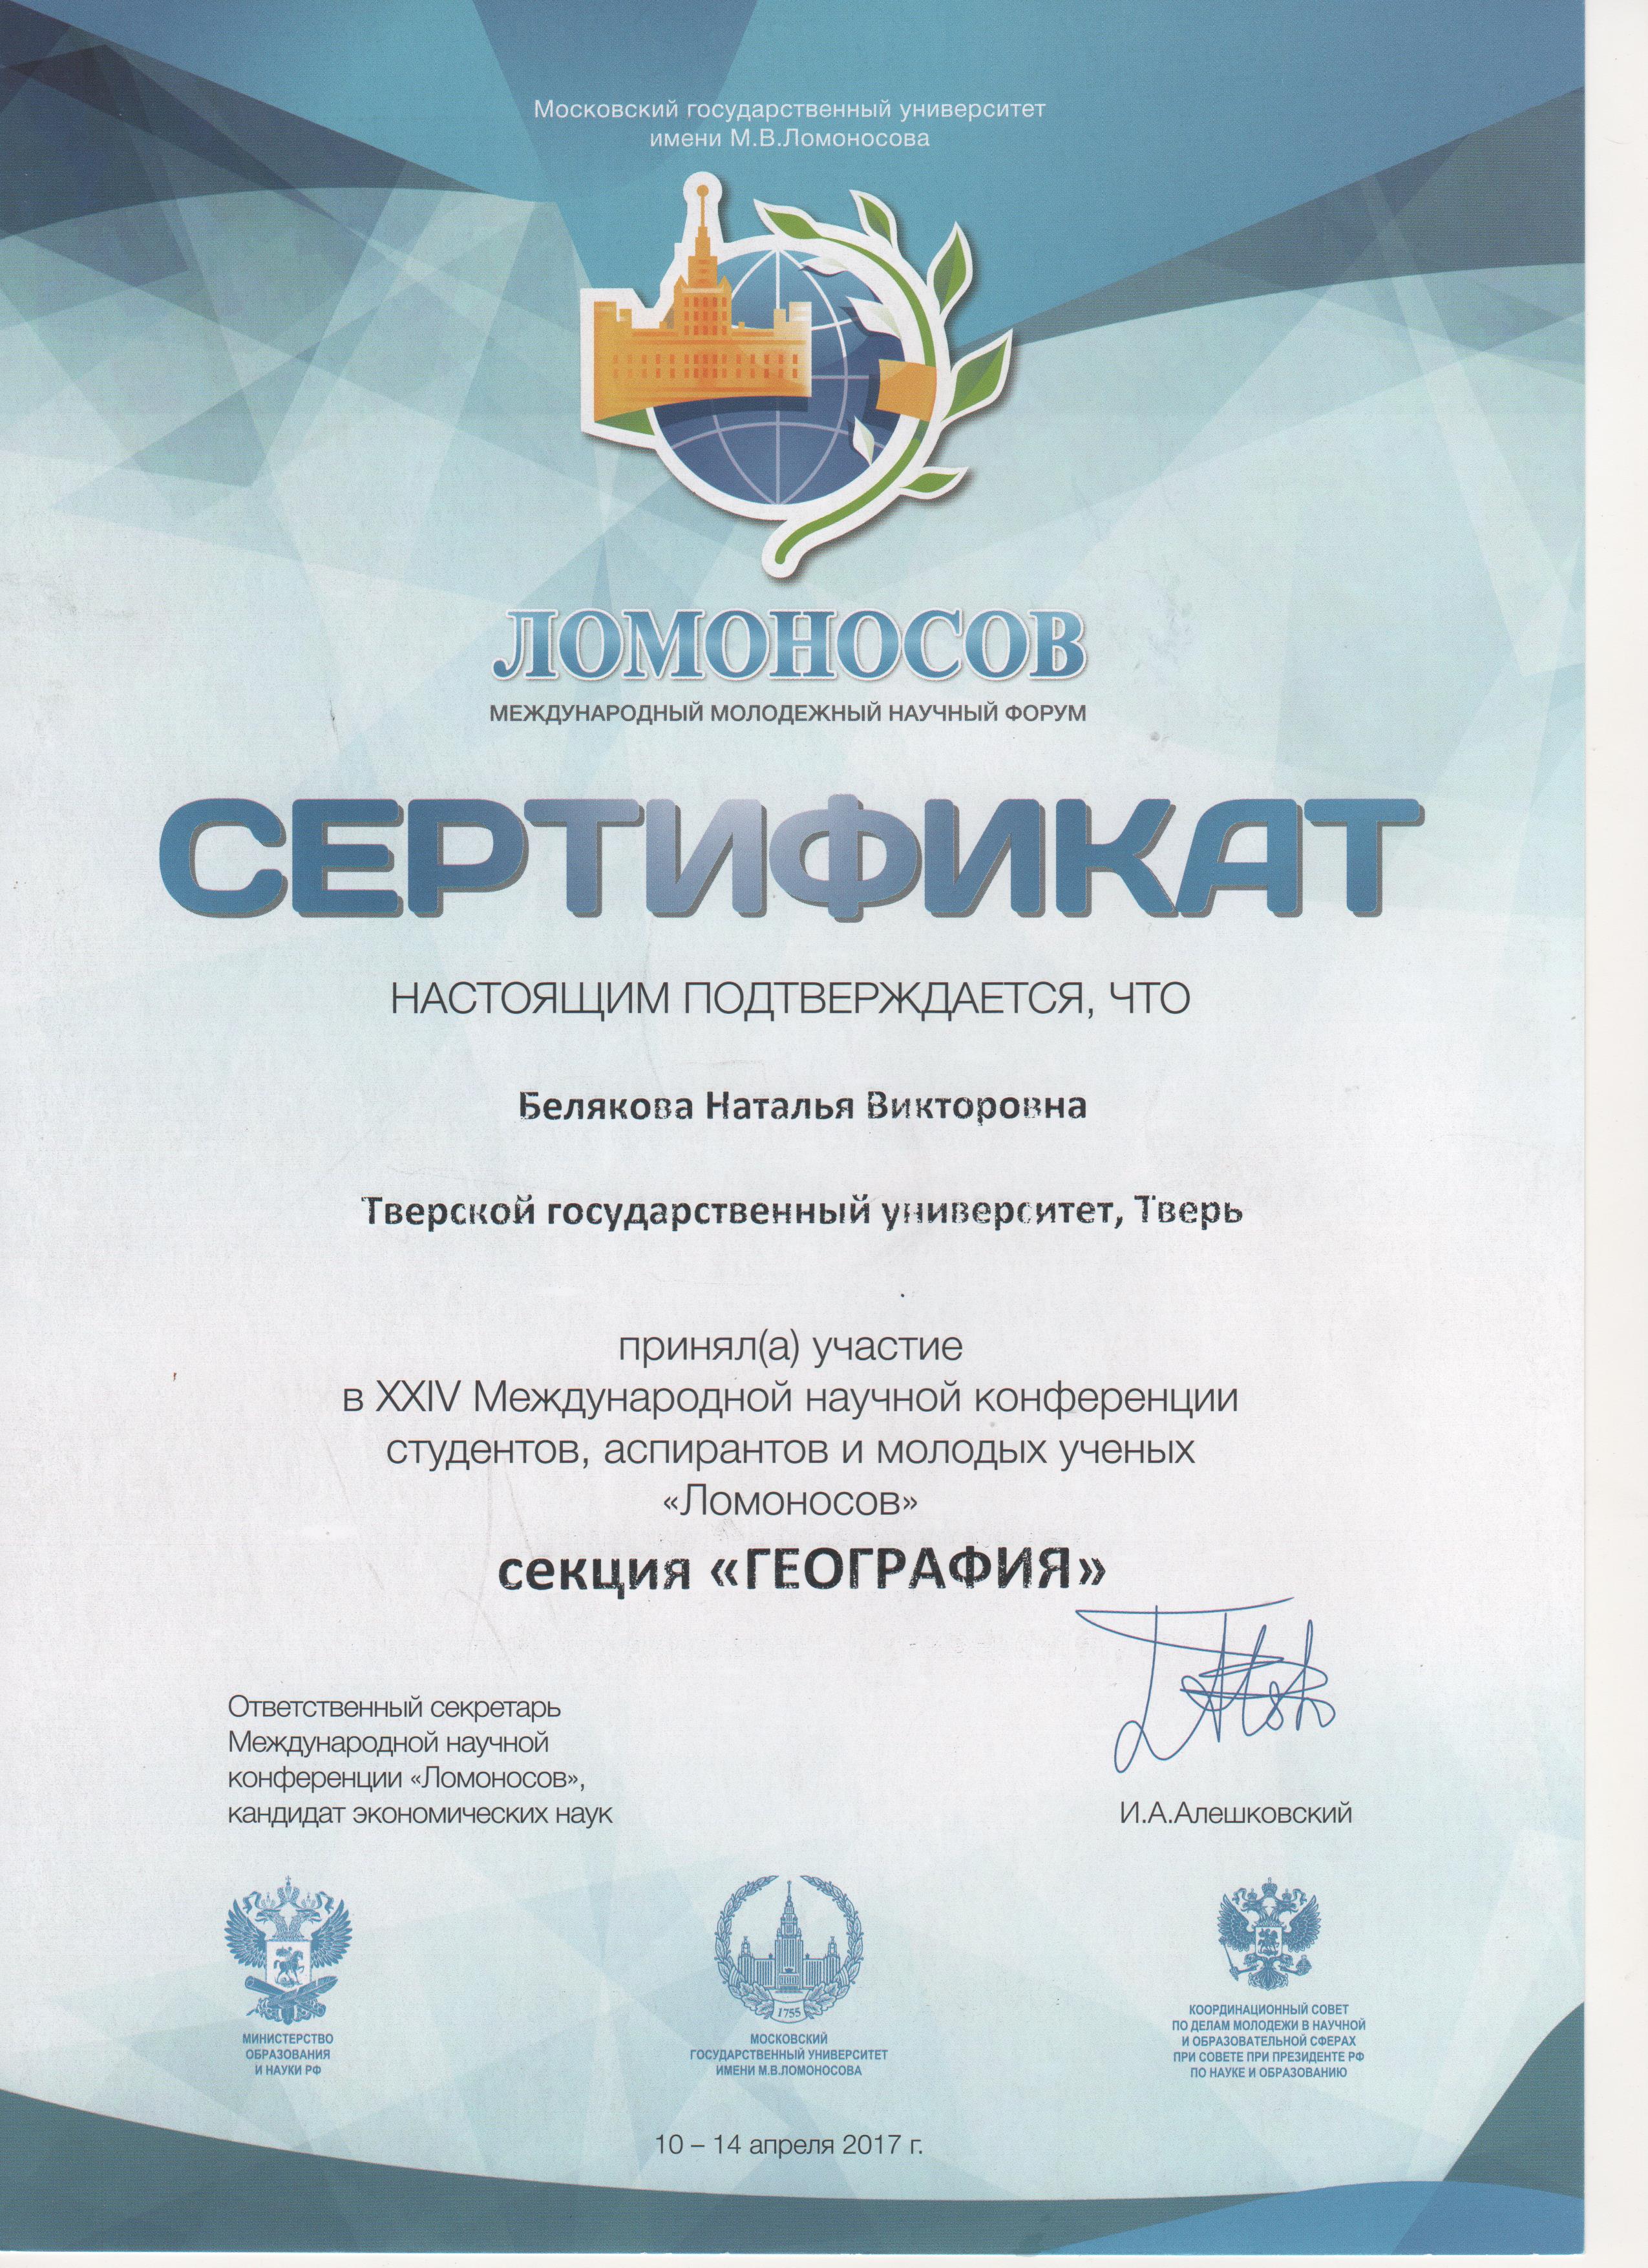 Сертификат Ломоносов 2017.jpg